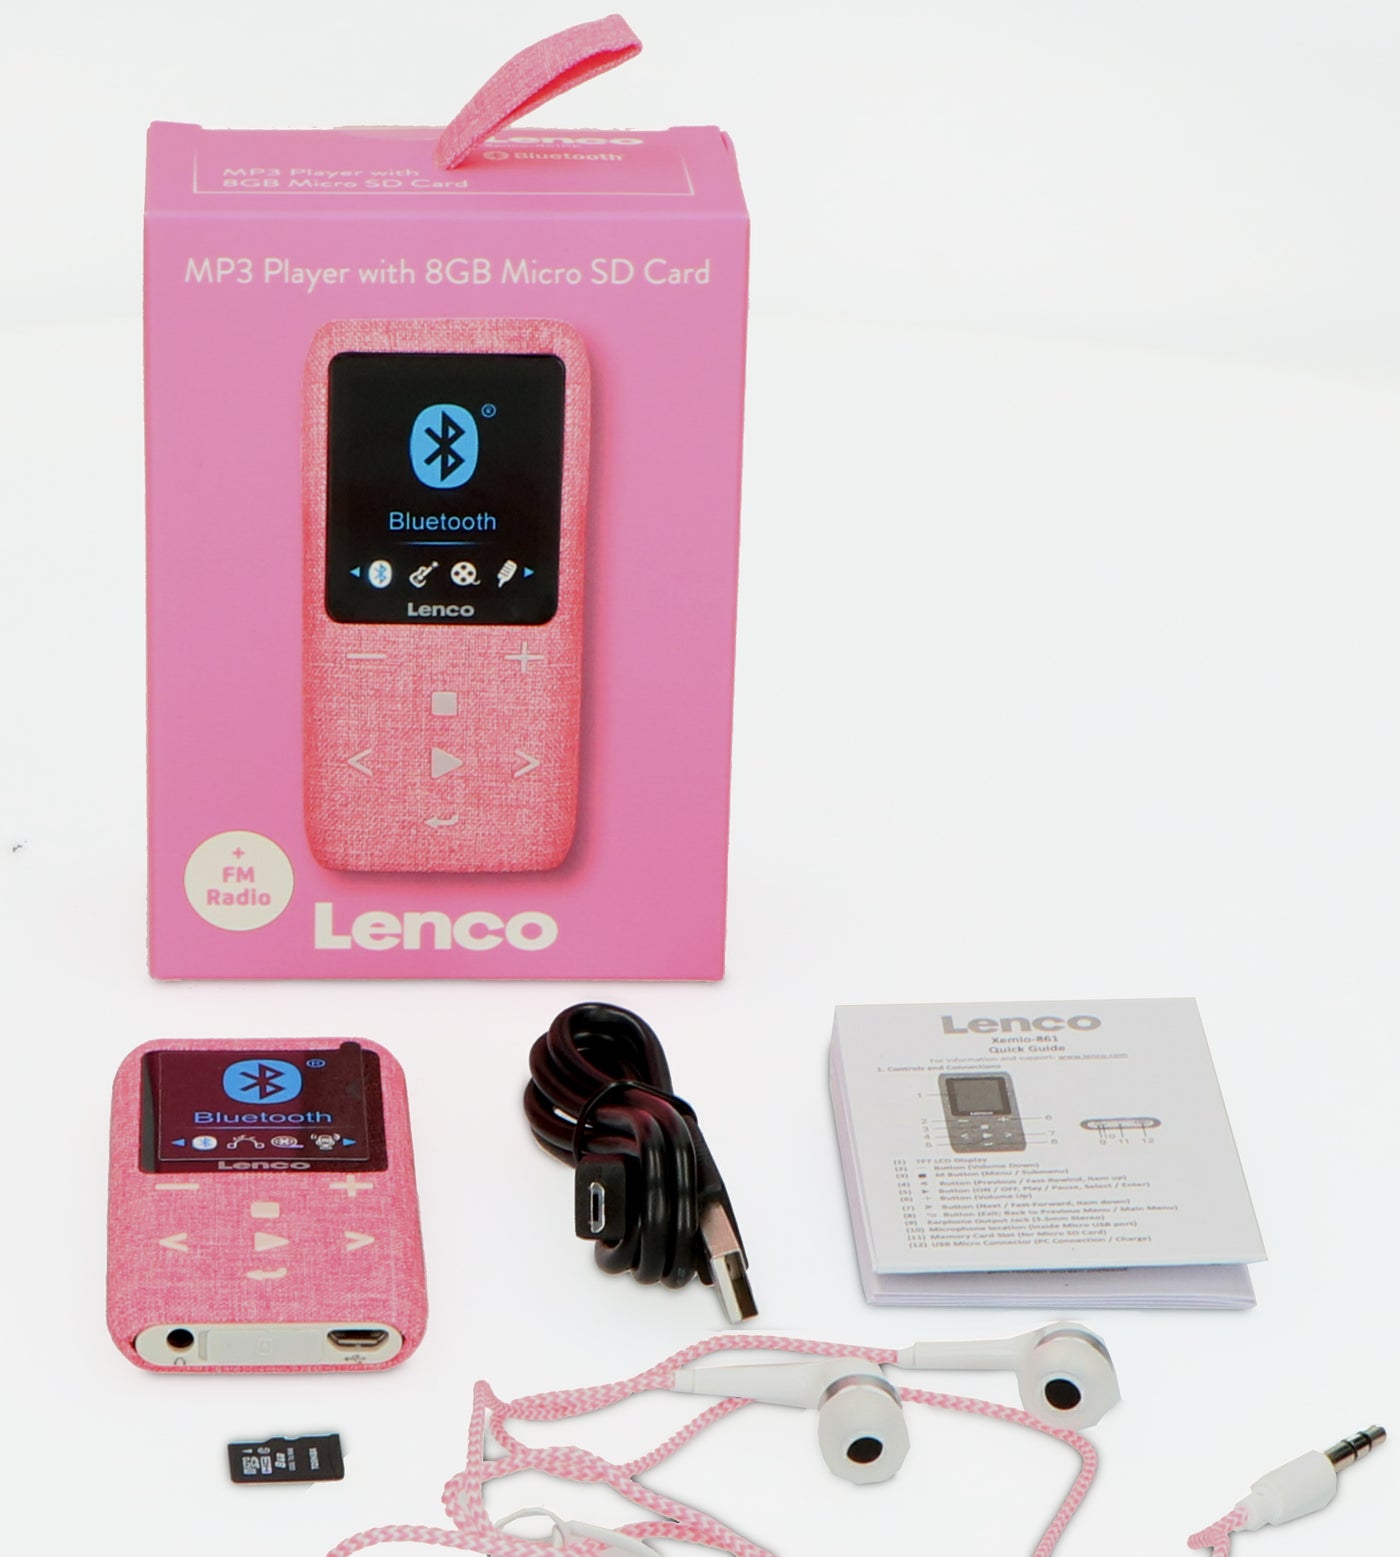 Card Lenco-Catalog MP3/MP4 Micro – - SD - 8GB LENCO with Bluetooth® Player Xemio-861PK